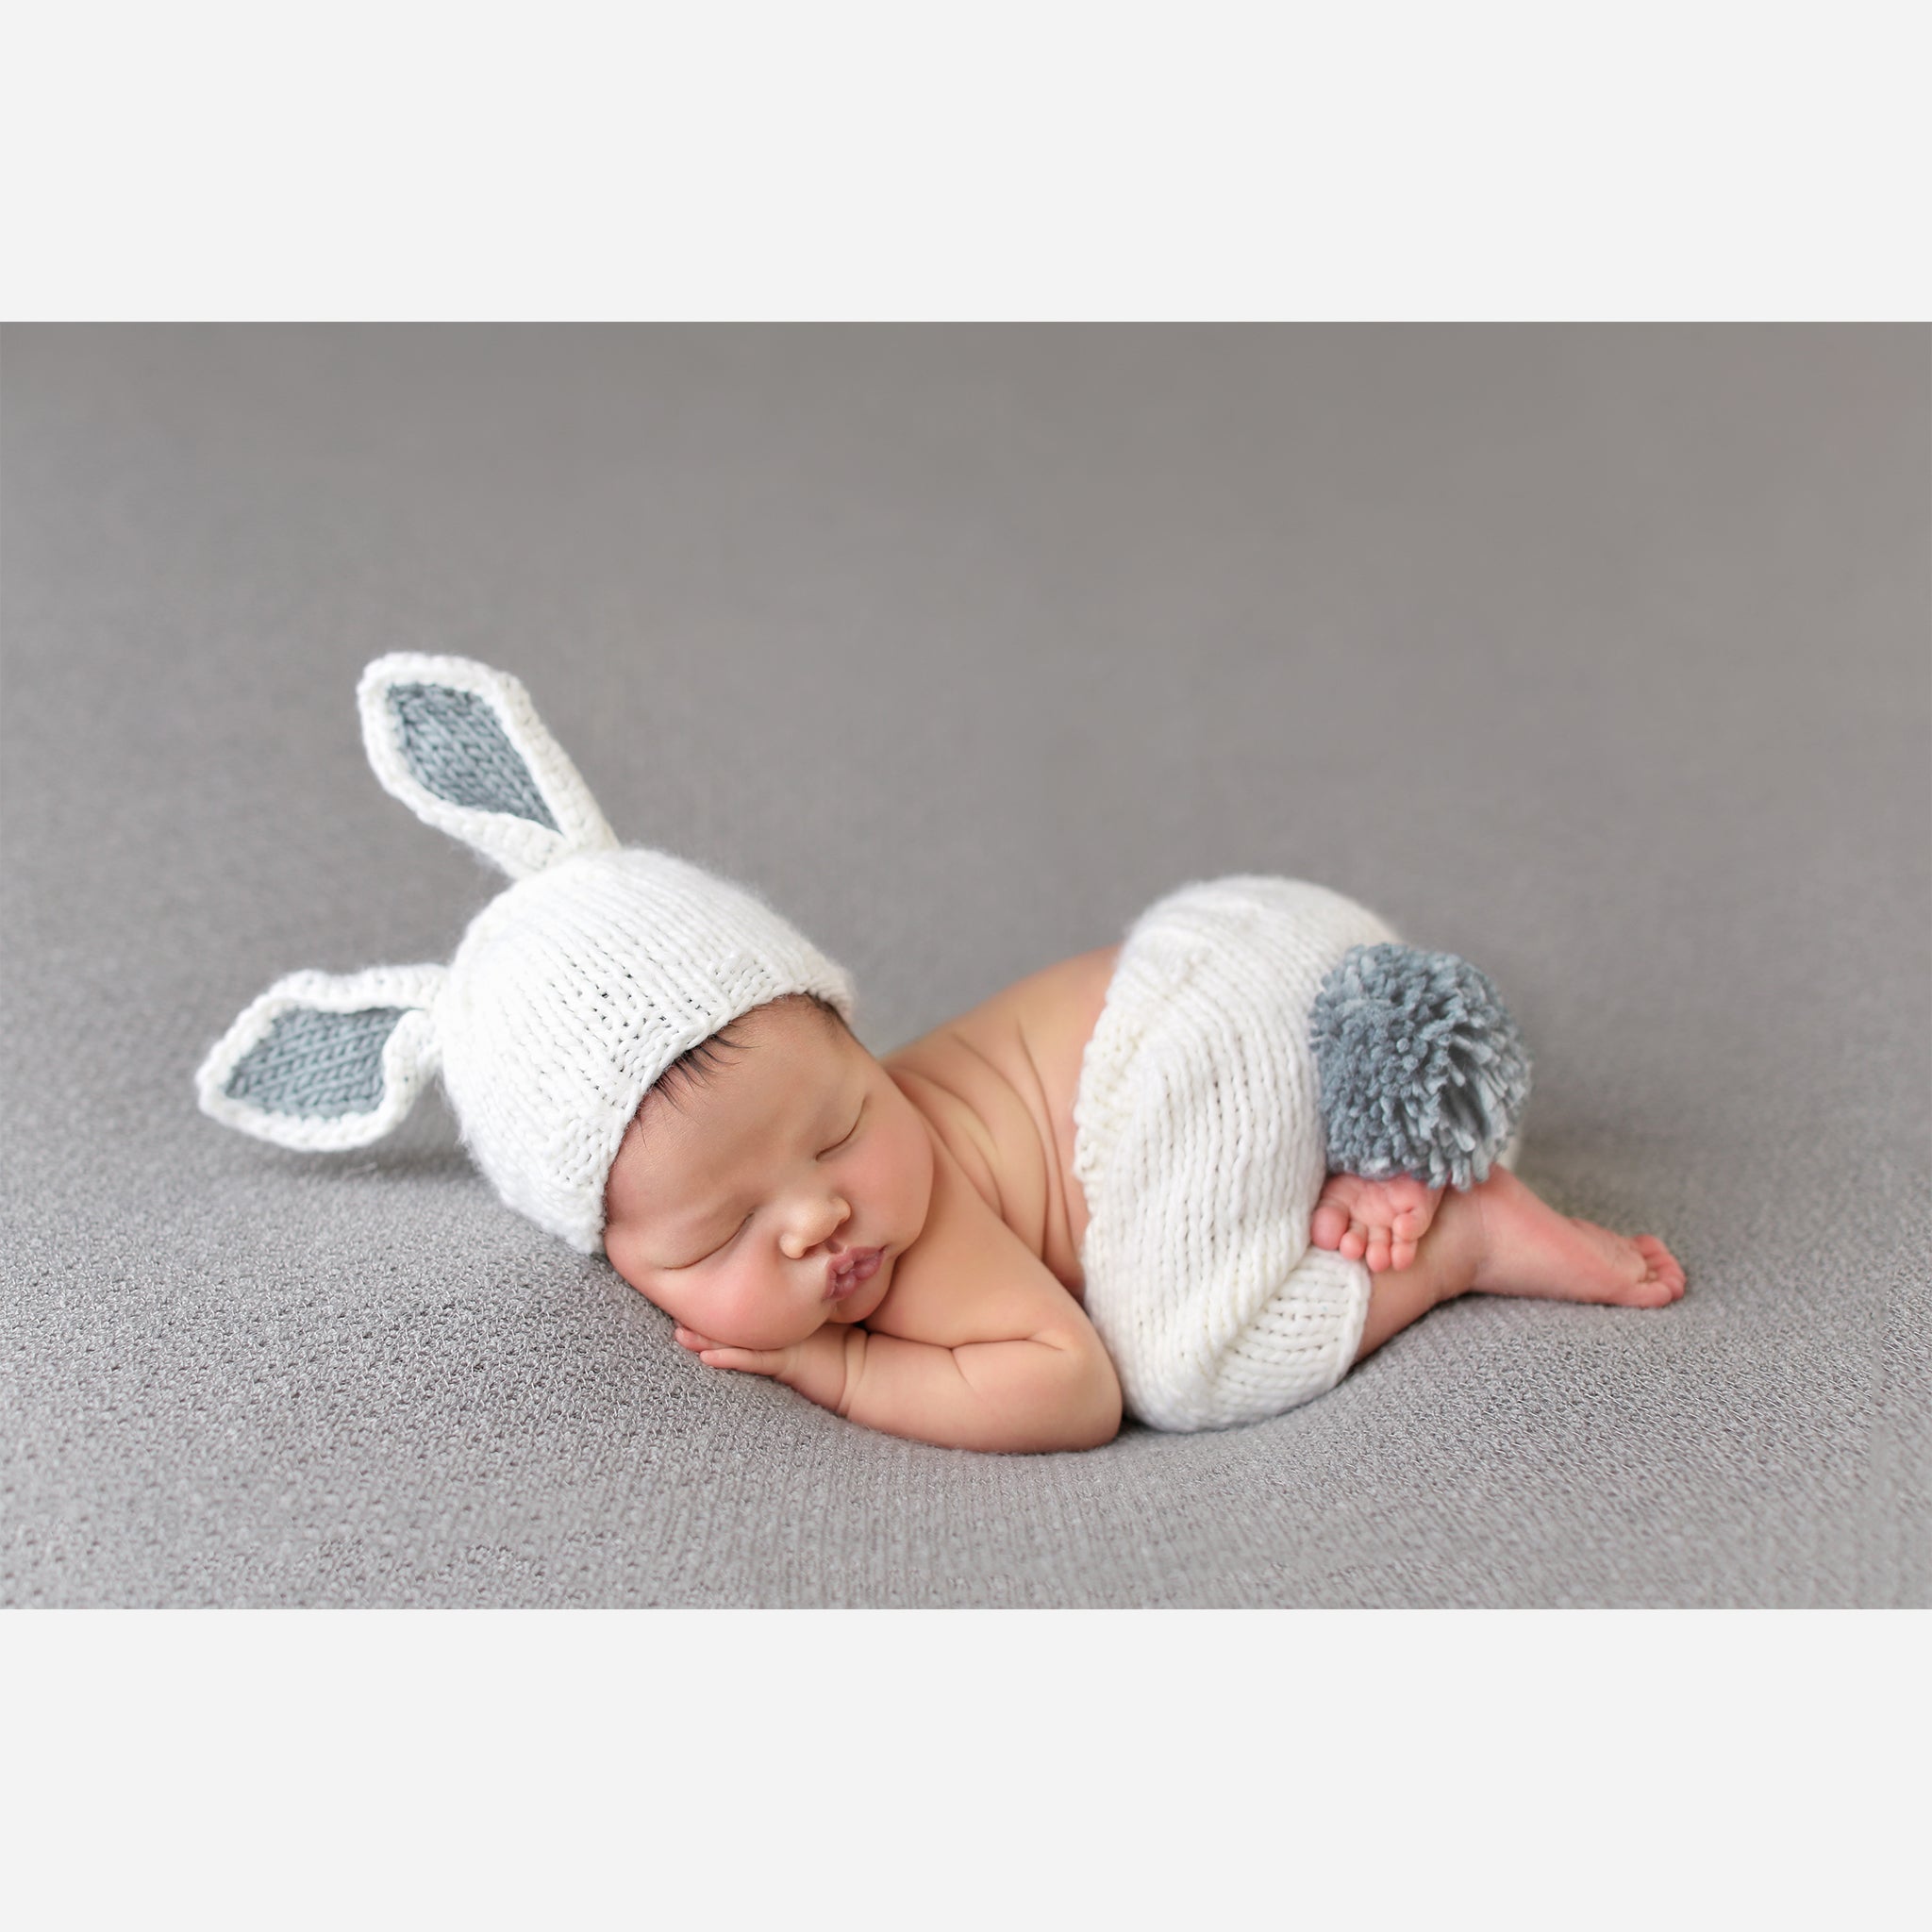 The Blueberry Hill Bailey Bunny Newborn Knit Set